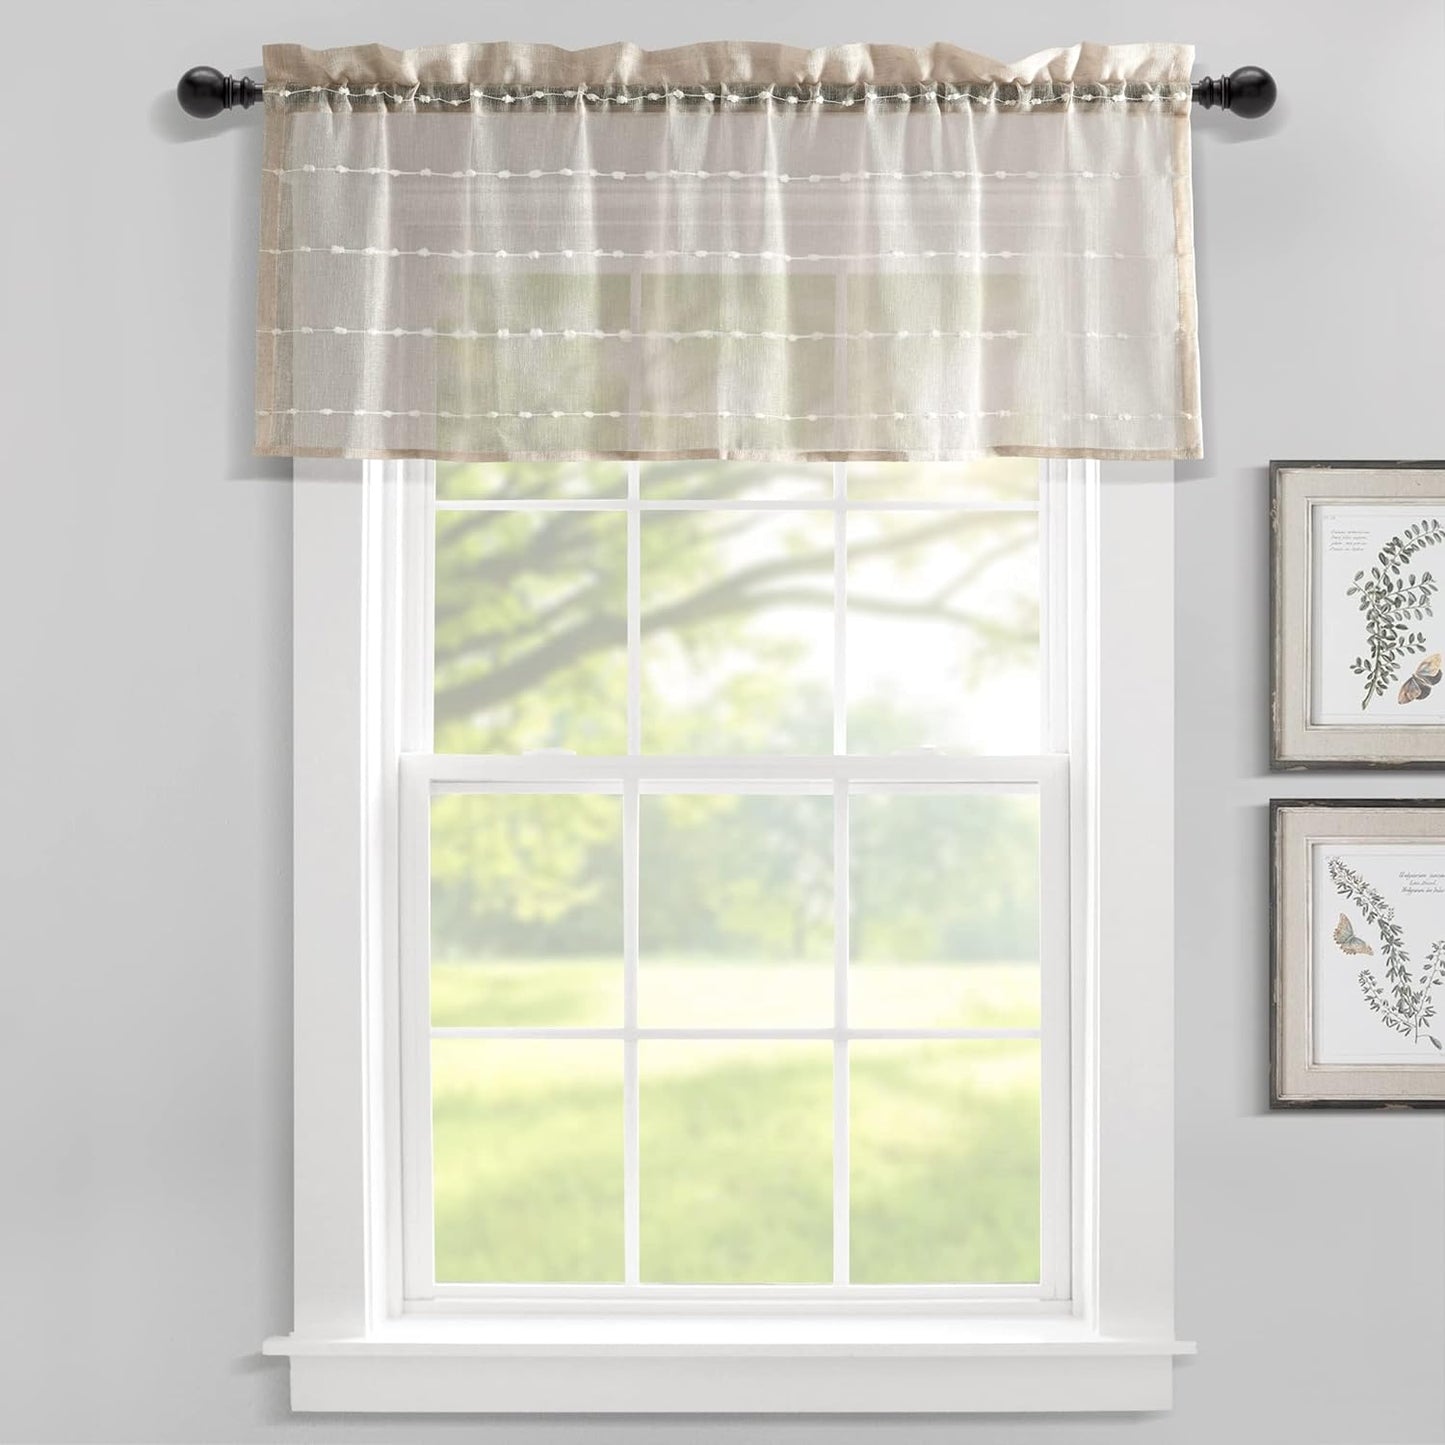 Lush Decor Farmhouse Textured Grommet Sheer Window Curtain Panel Pair, 38"W X 95"L, Gray  Triangle Home Fashions Neutral Single Valance